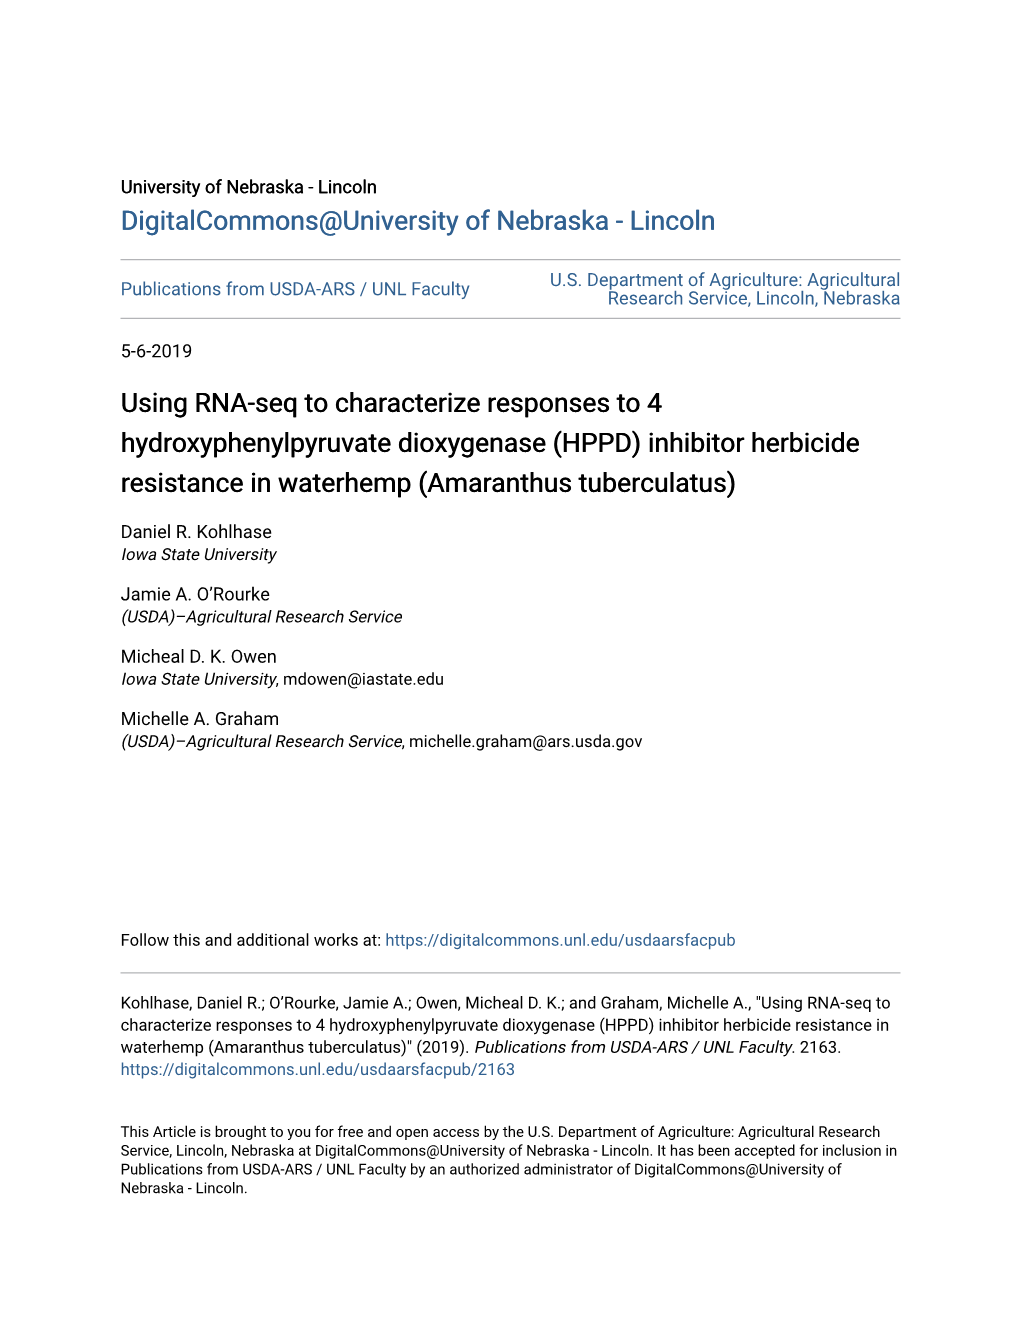 HPPD) Inhibitor Herbicide Resistance in Waterhemp (Amaranthus Tuberculatus